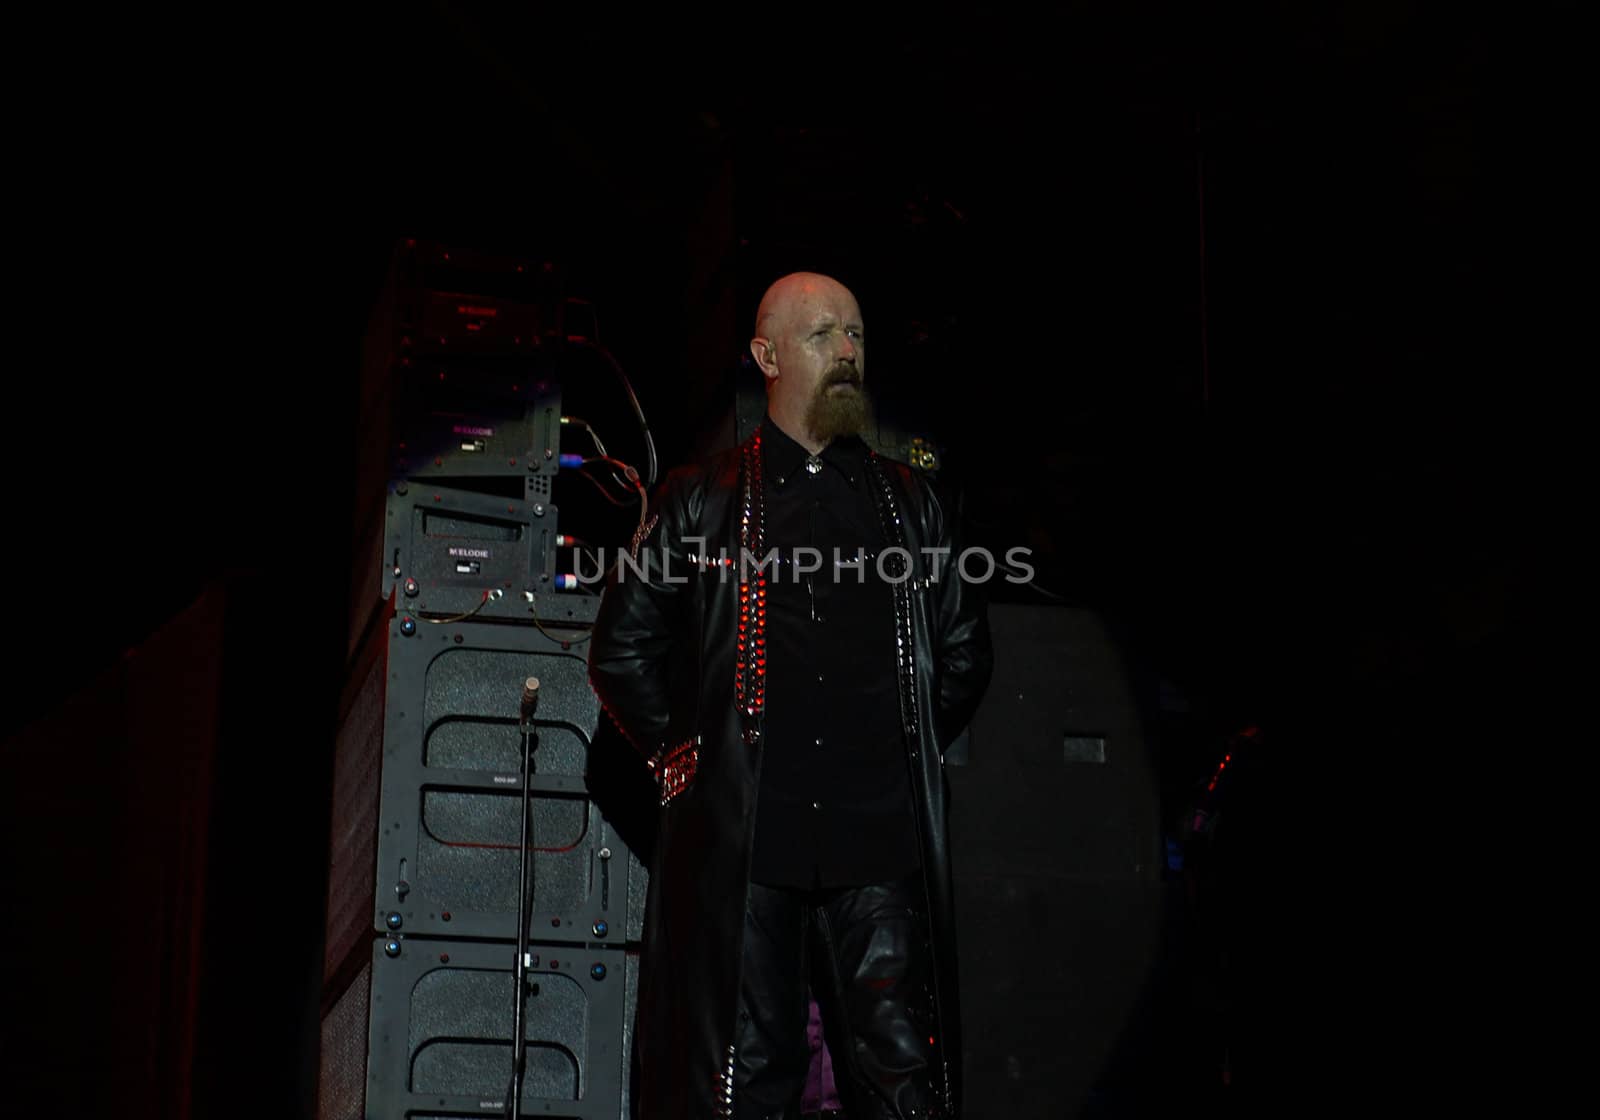  Judas Priest performs at B'ESTFEST Aftershock July 11, 2008 in Bucharest.